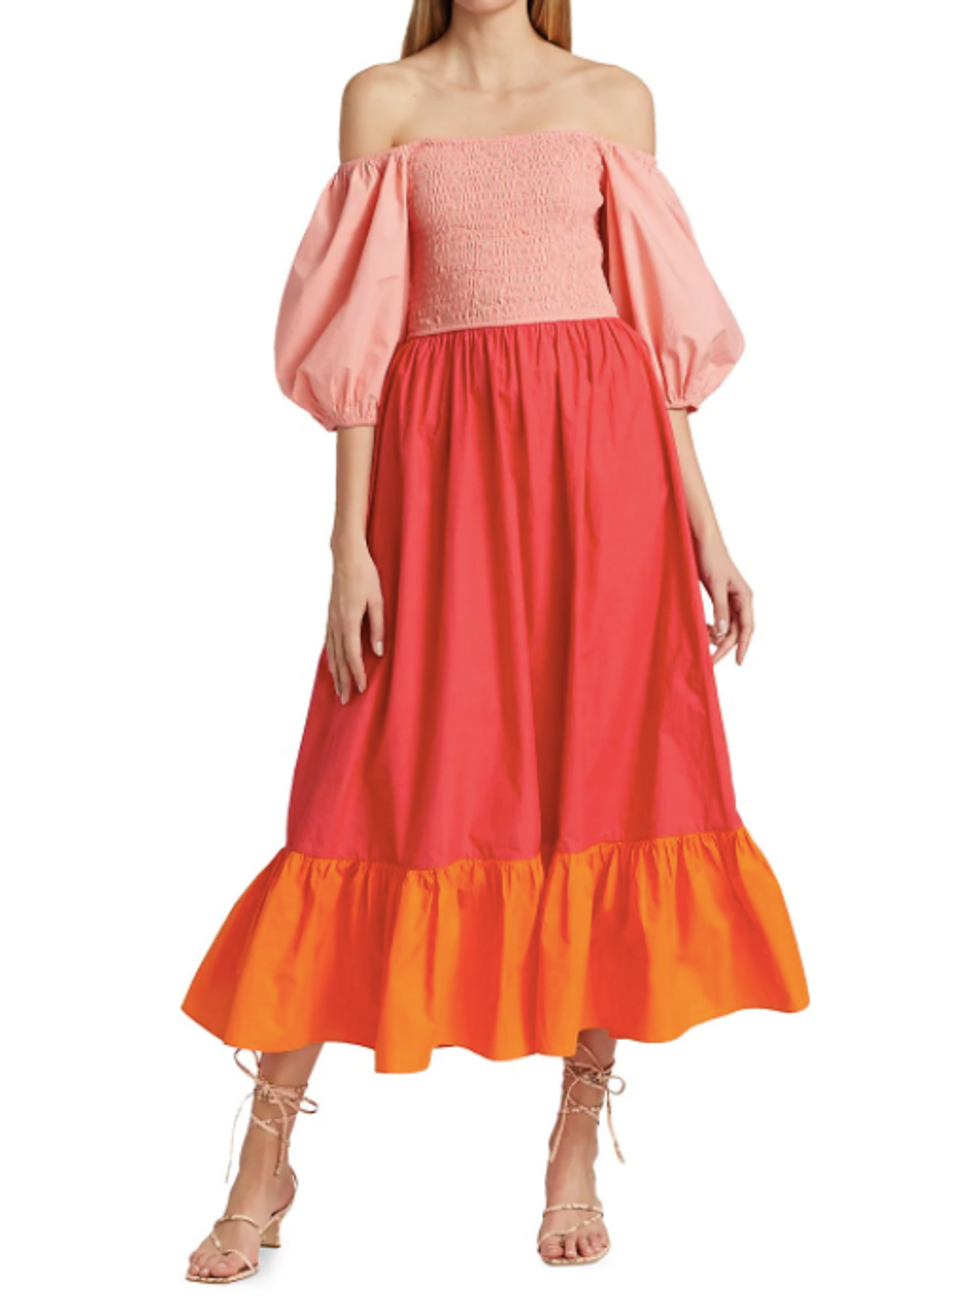 Saks Fifth Avenue labor day sale RHODE Eloise Puff Sleeve Colorblocked Midi Dress